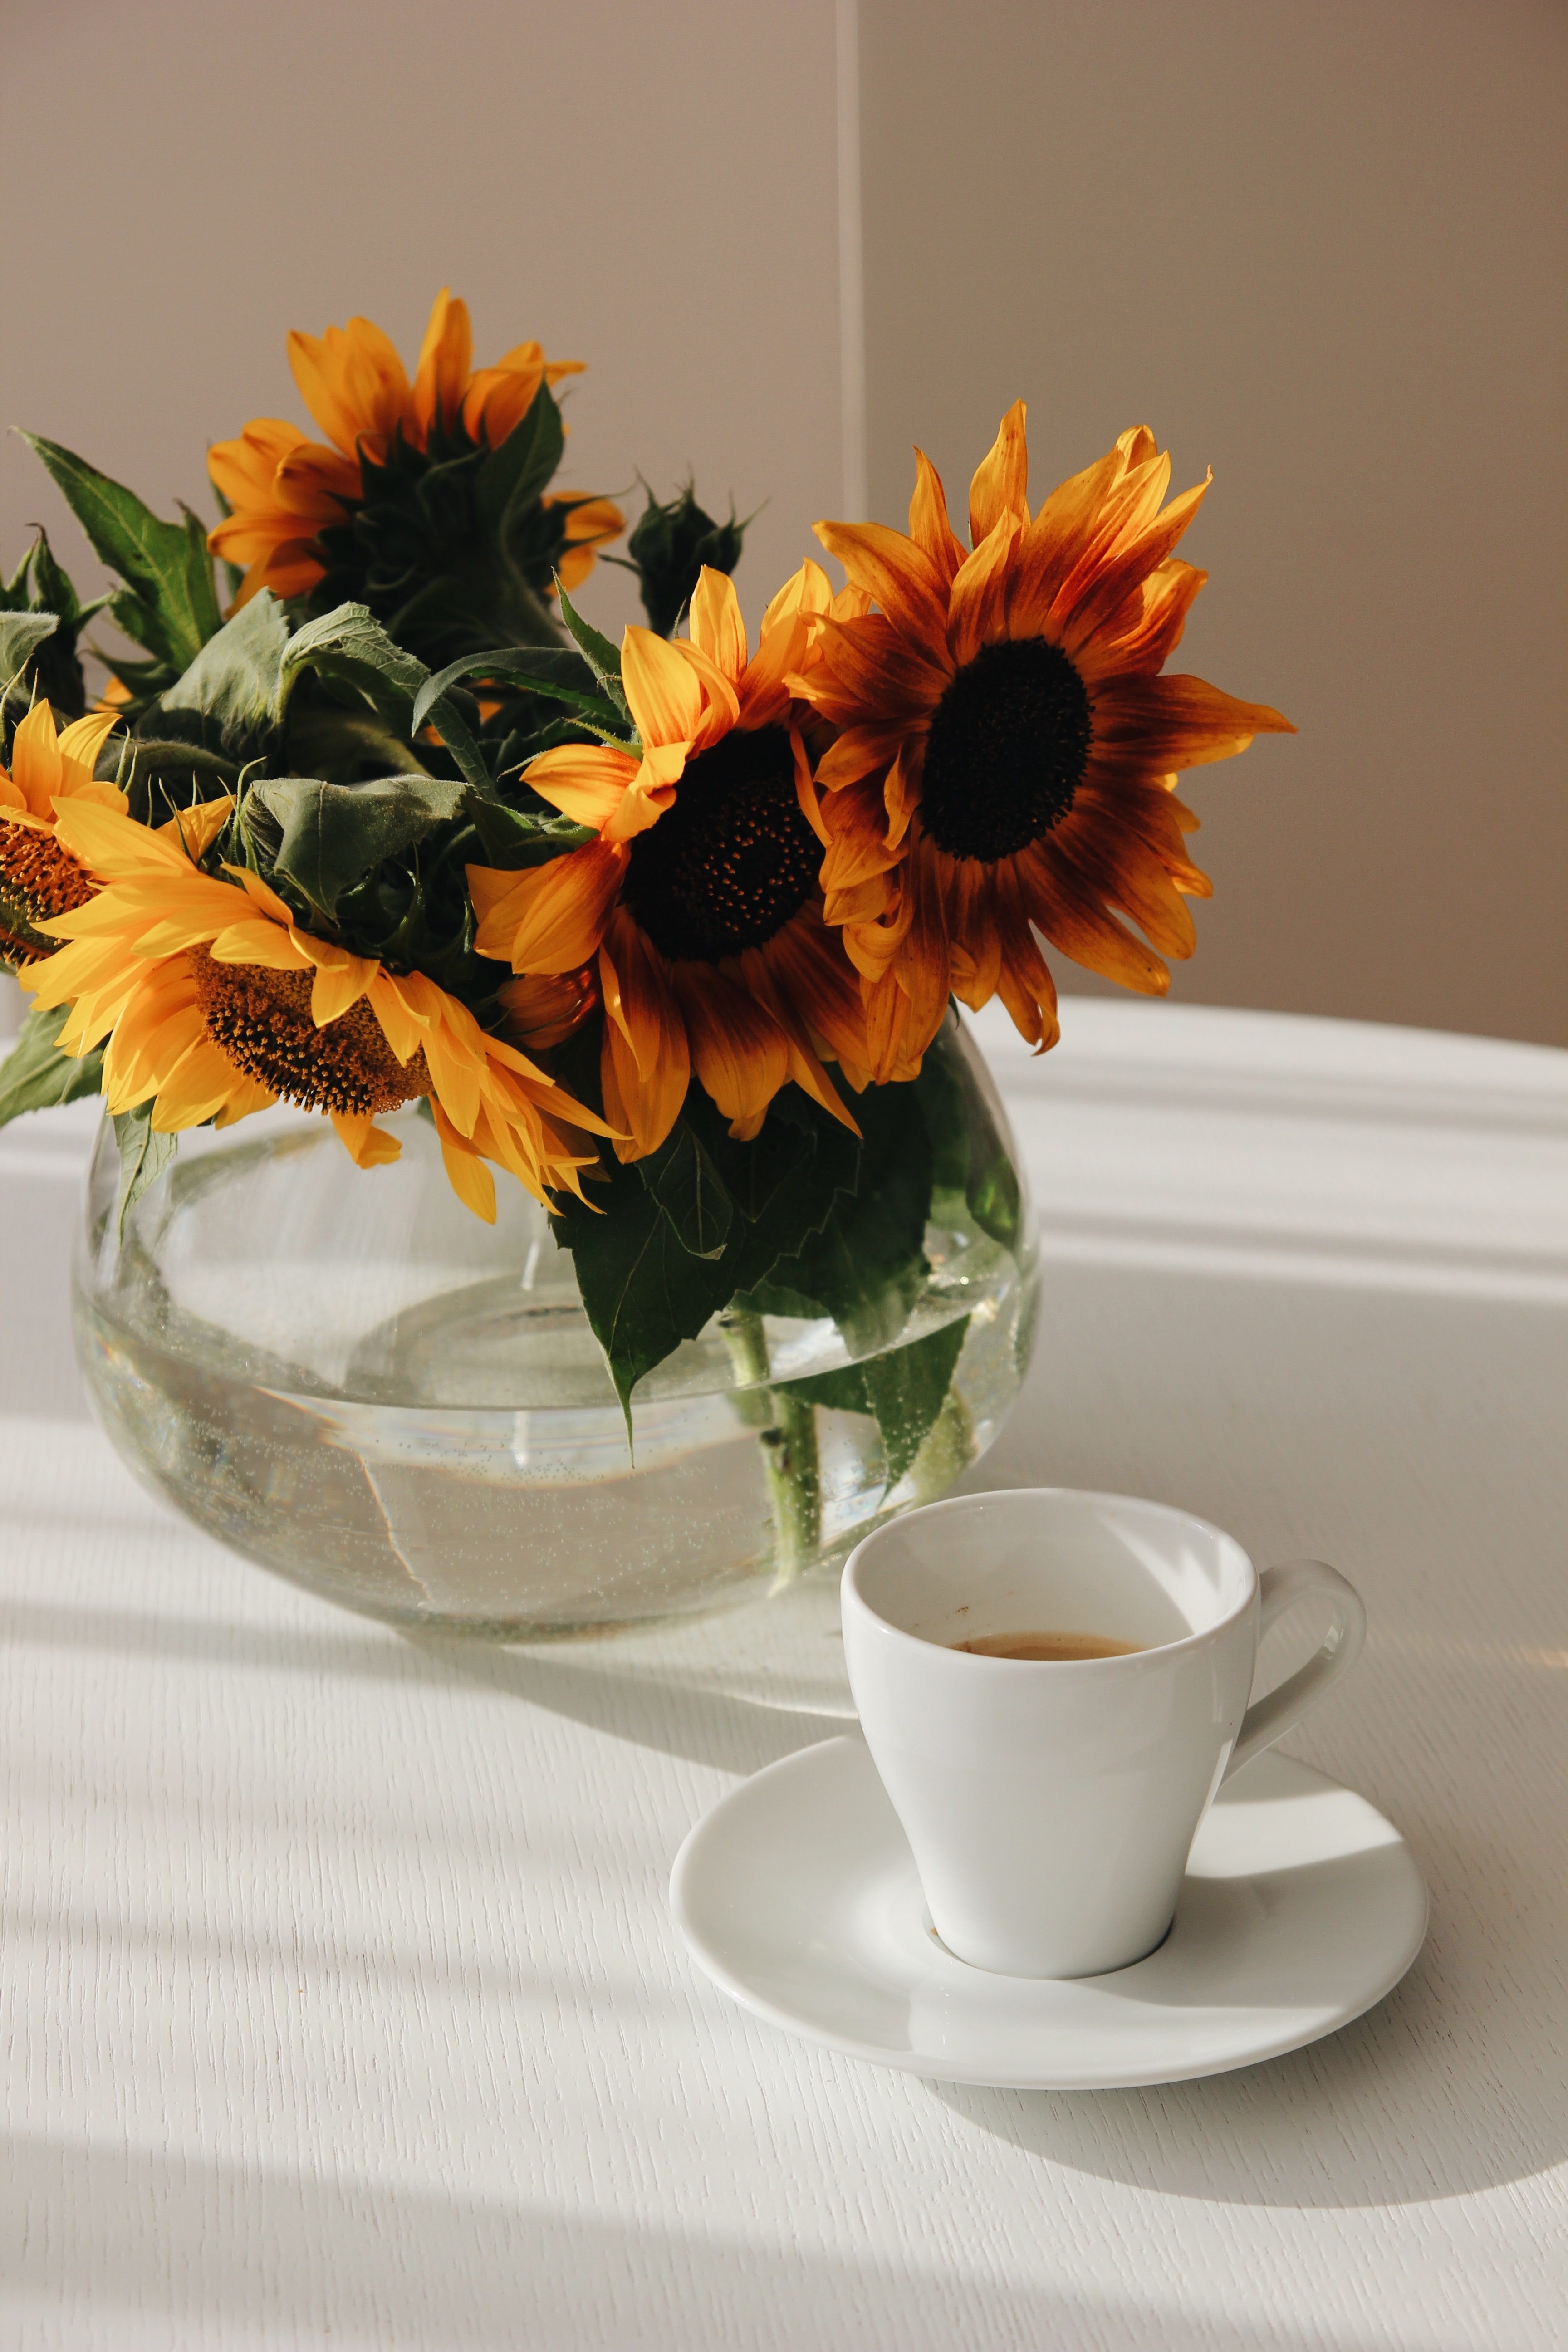 sunflowers, cup, flowers, bouquet, table, vase